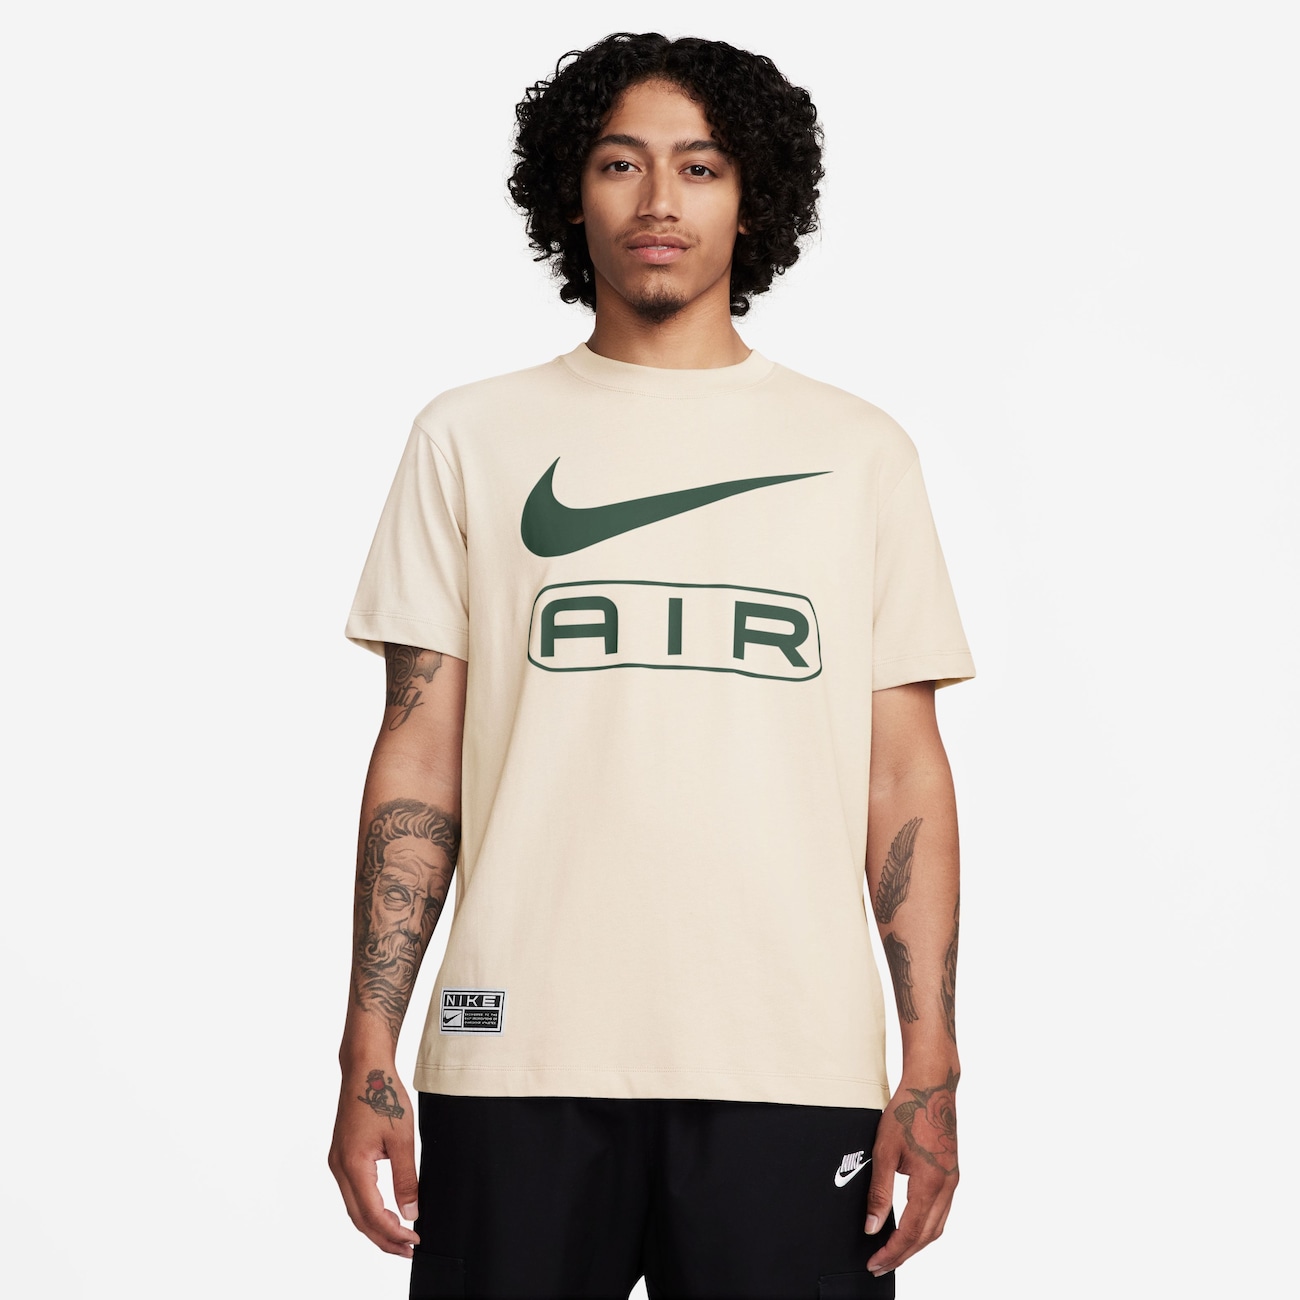 Camiseta Nike Sportswear Air Feminina